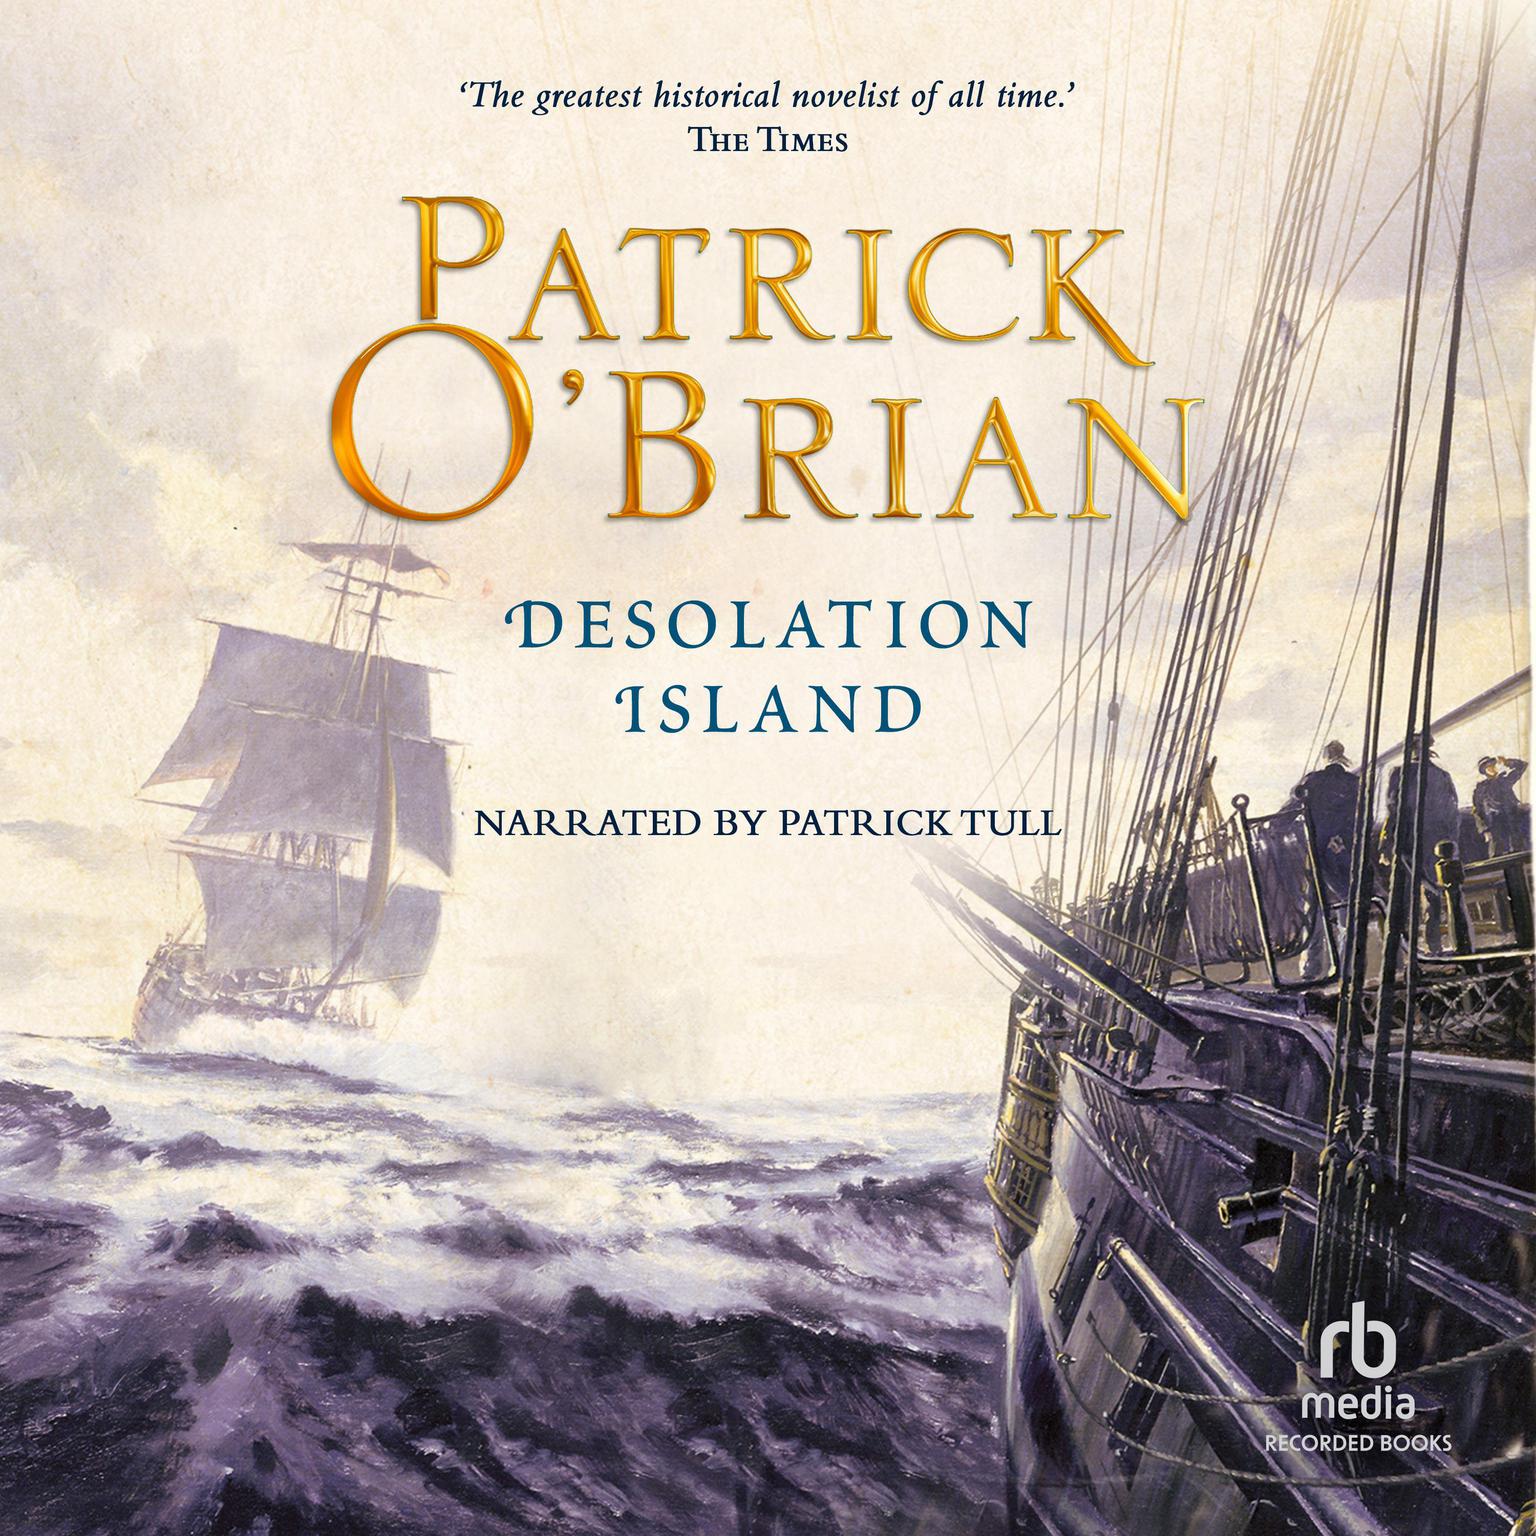 Desolation Island Audiobook, by Patrick O’Brian